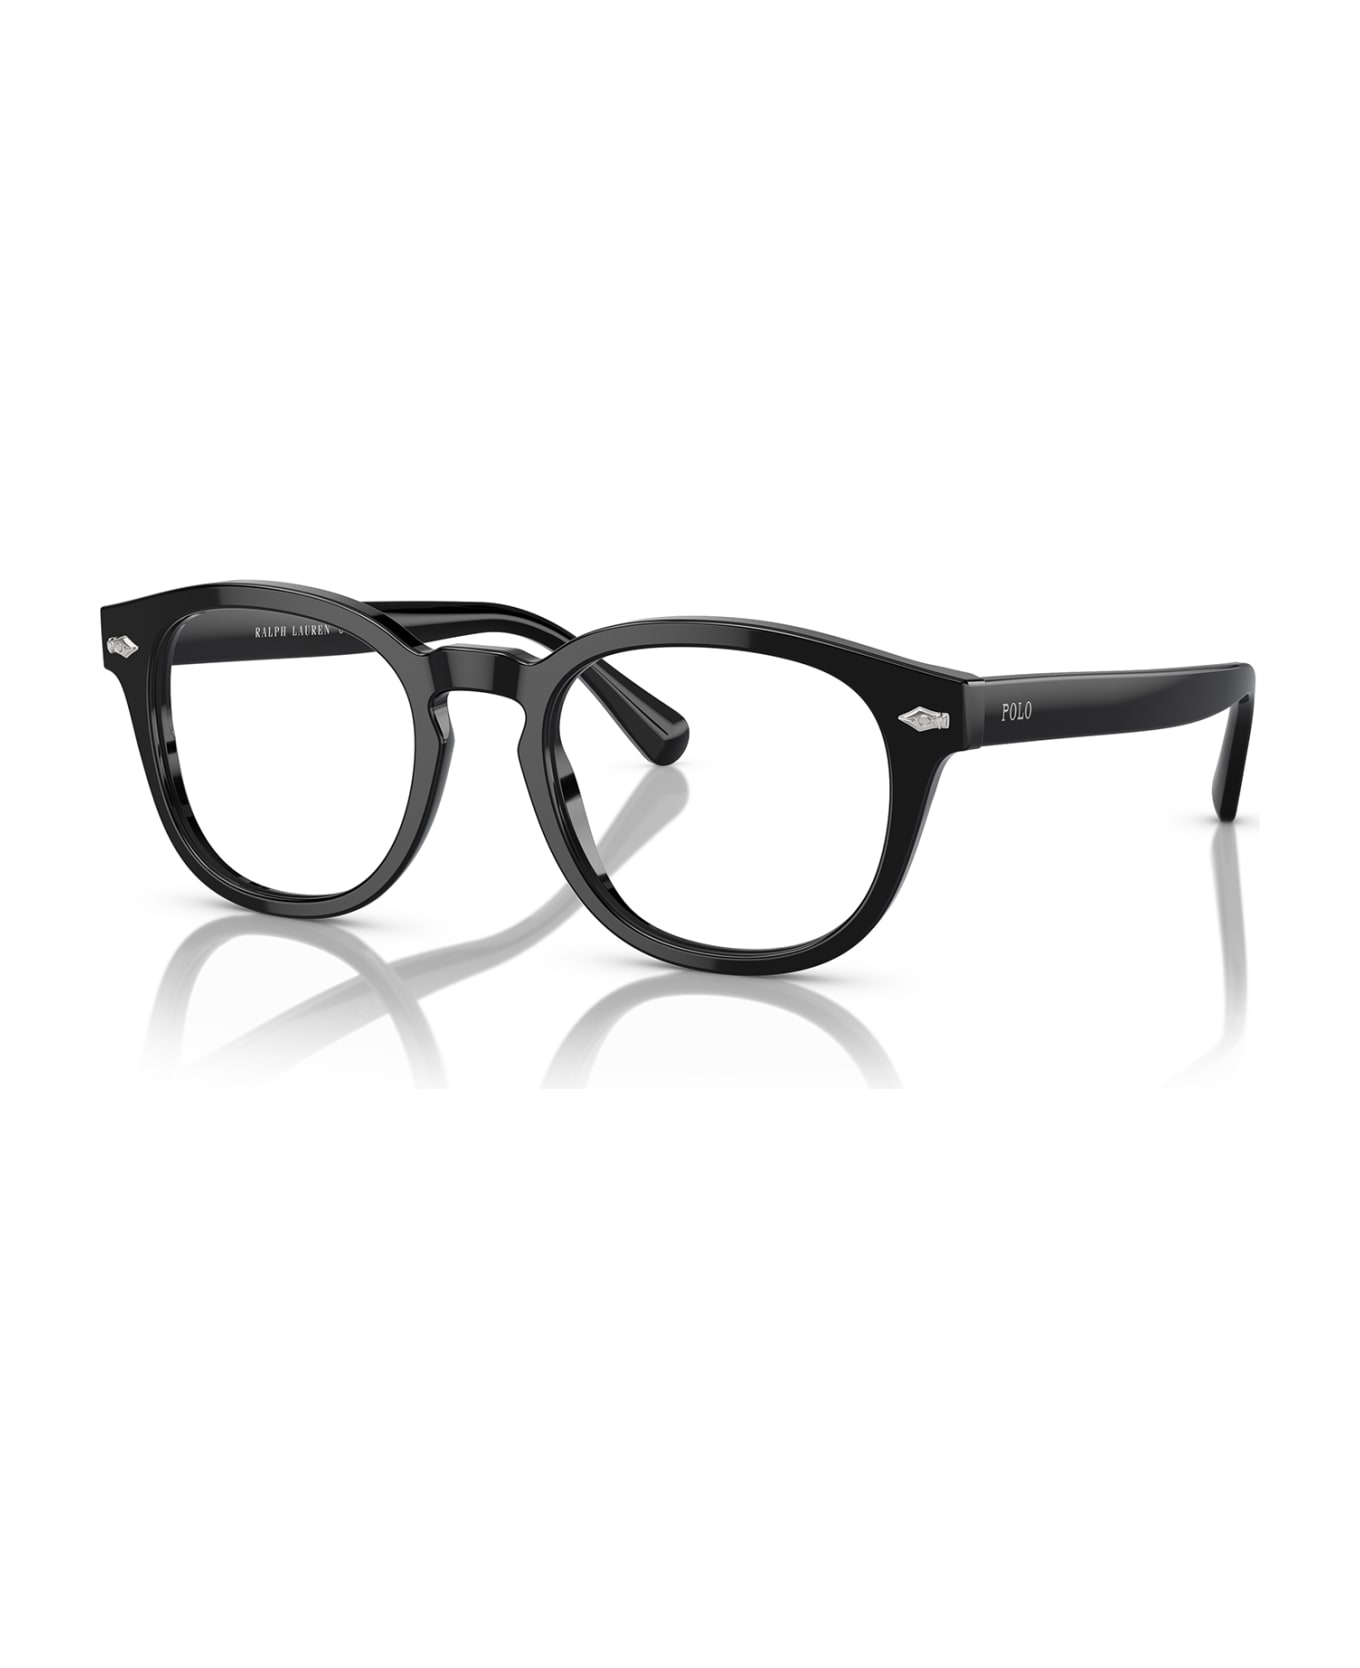 Polo Ralph Lauren Ph2272 Shiny Black Glasses - Shiny Black アイウェア